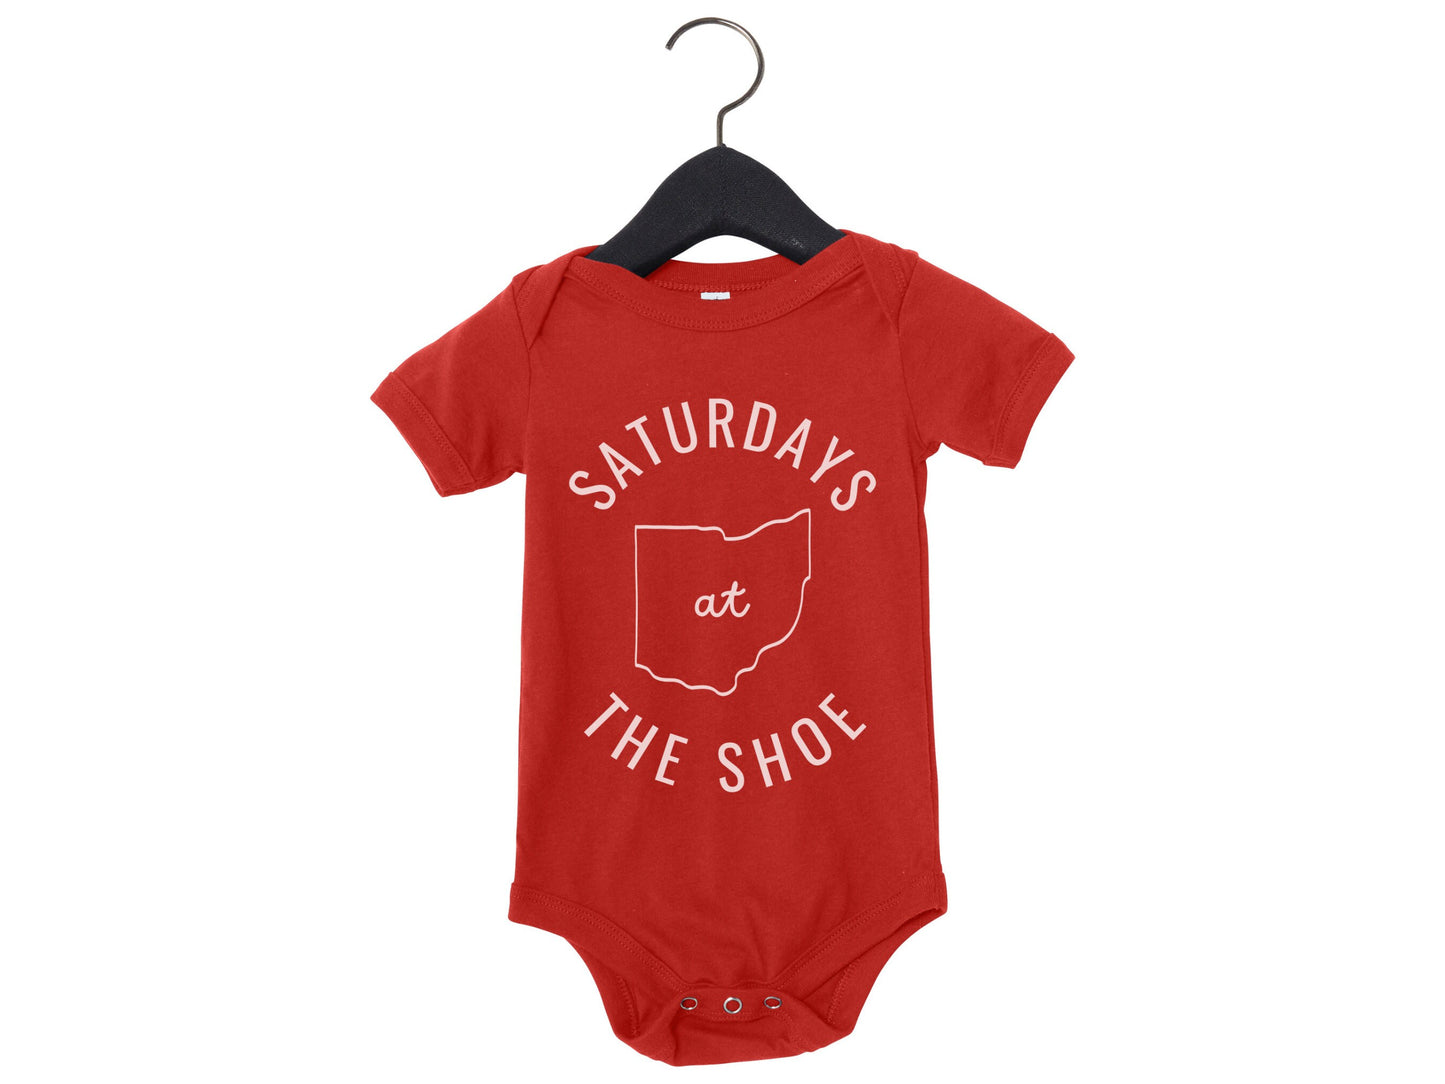 Ohio State Saturdays at The Shoe: Trendy Unisex onesie for babies - Buckeye Love, Game Day Apparel - Ohio state baby fanwear - OSU Buckeyes